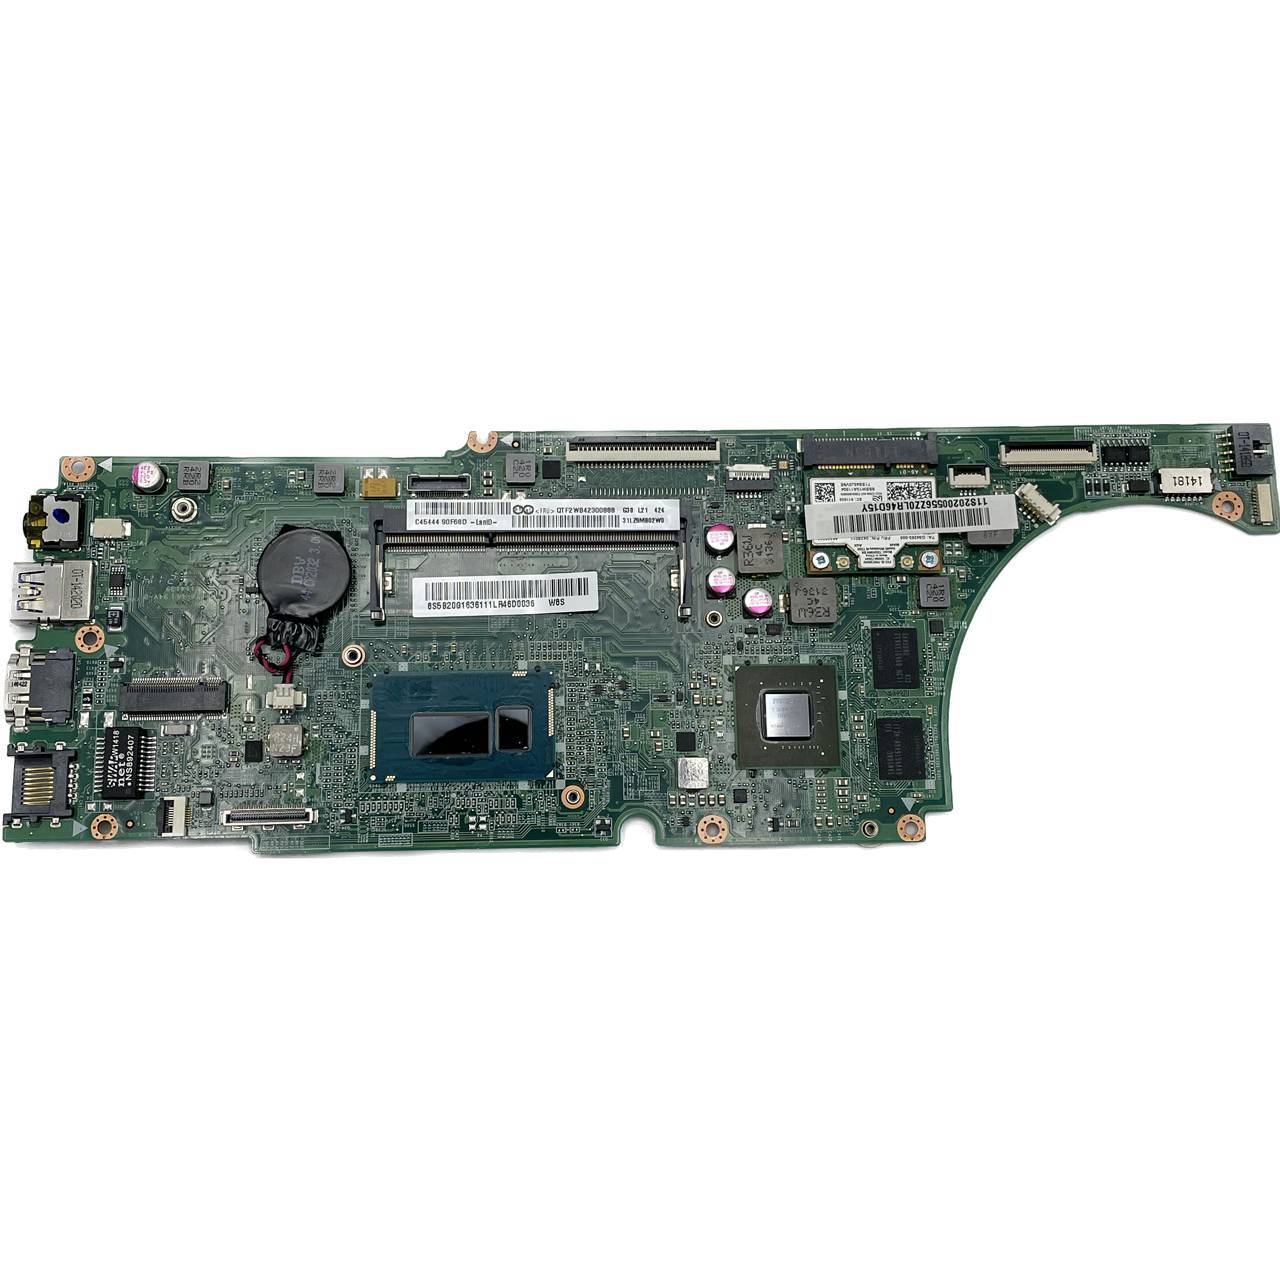 Lenovo U530 Mainboard i7-4510u gebraucht